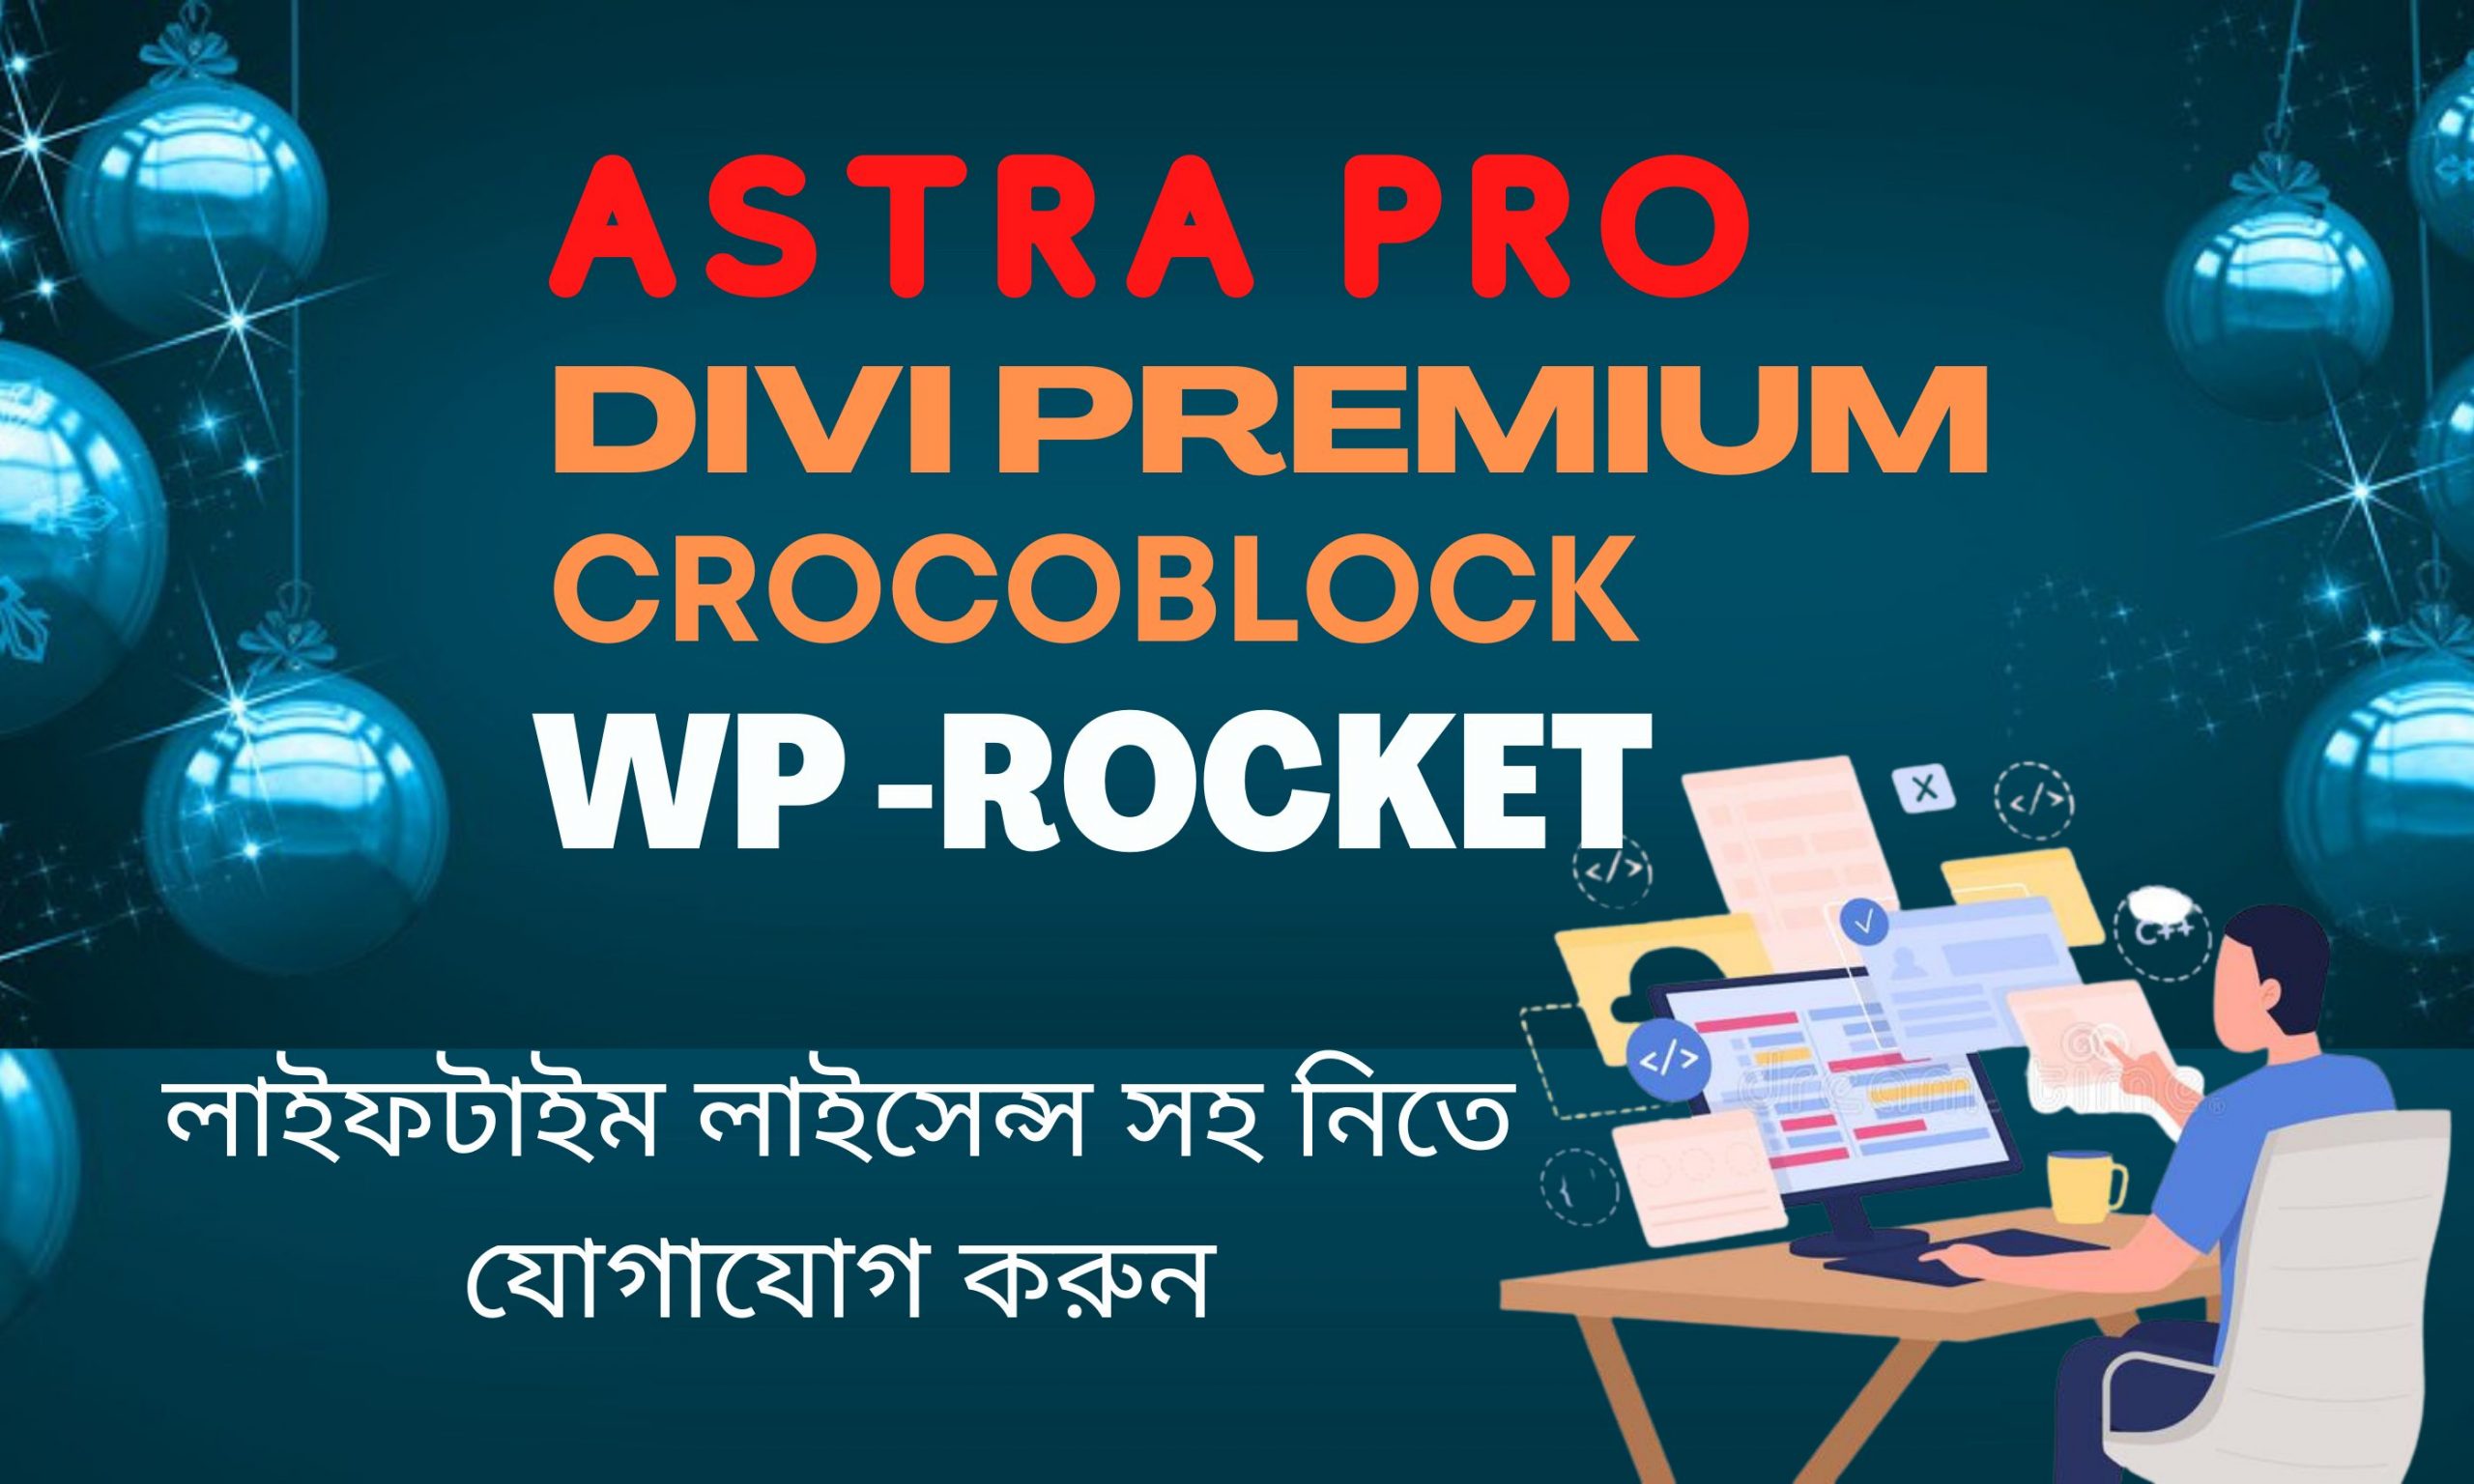 37529I will install Premium Astra Pro DiVi and Crocoblocks Wp-Rocket Plugins for Lifetime